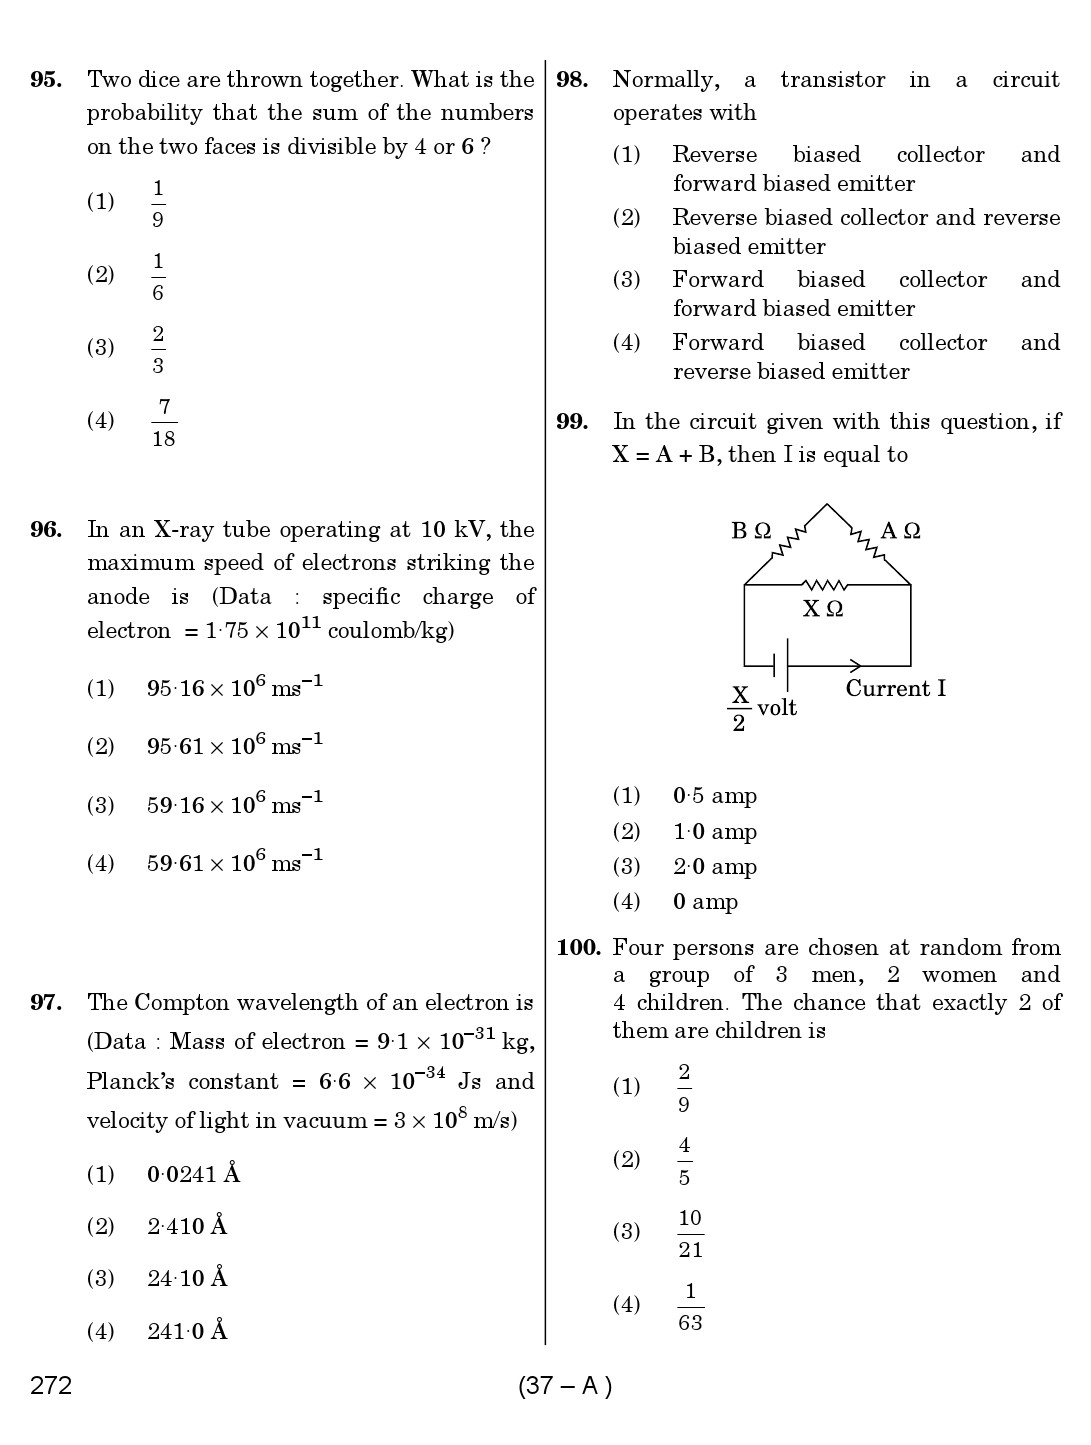 Karnataka PSC Mathematics Teacher Exam Sample Question Paper Subject code 272 37